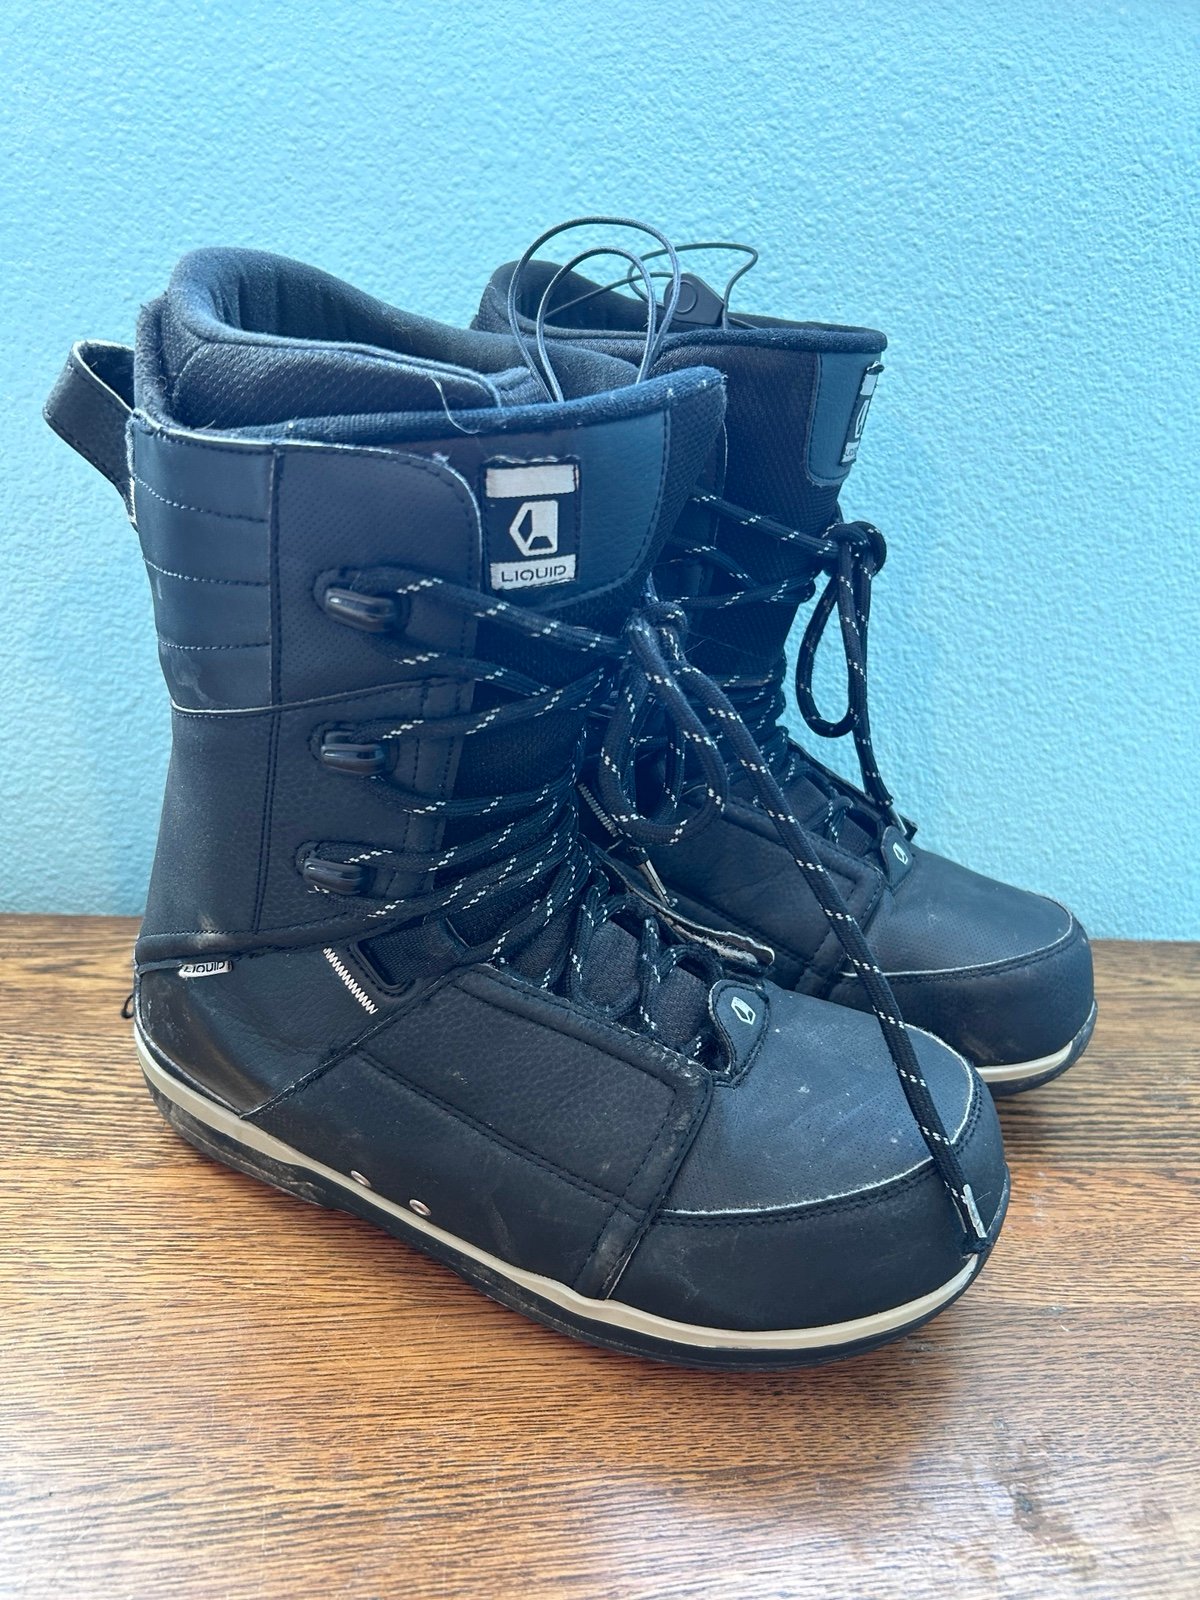 Men’s Liquid snowboarding boots size 11 JG8wzujqR